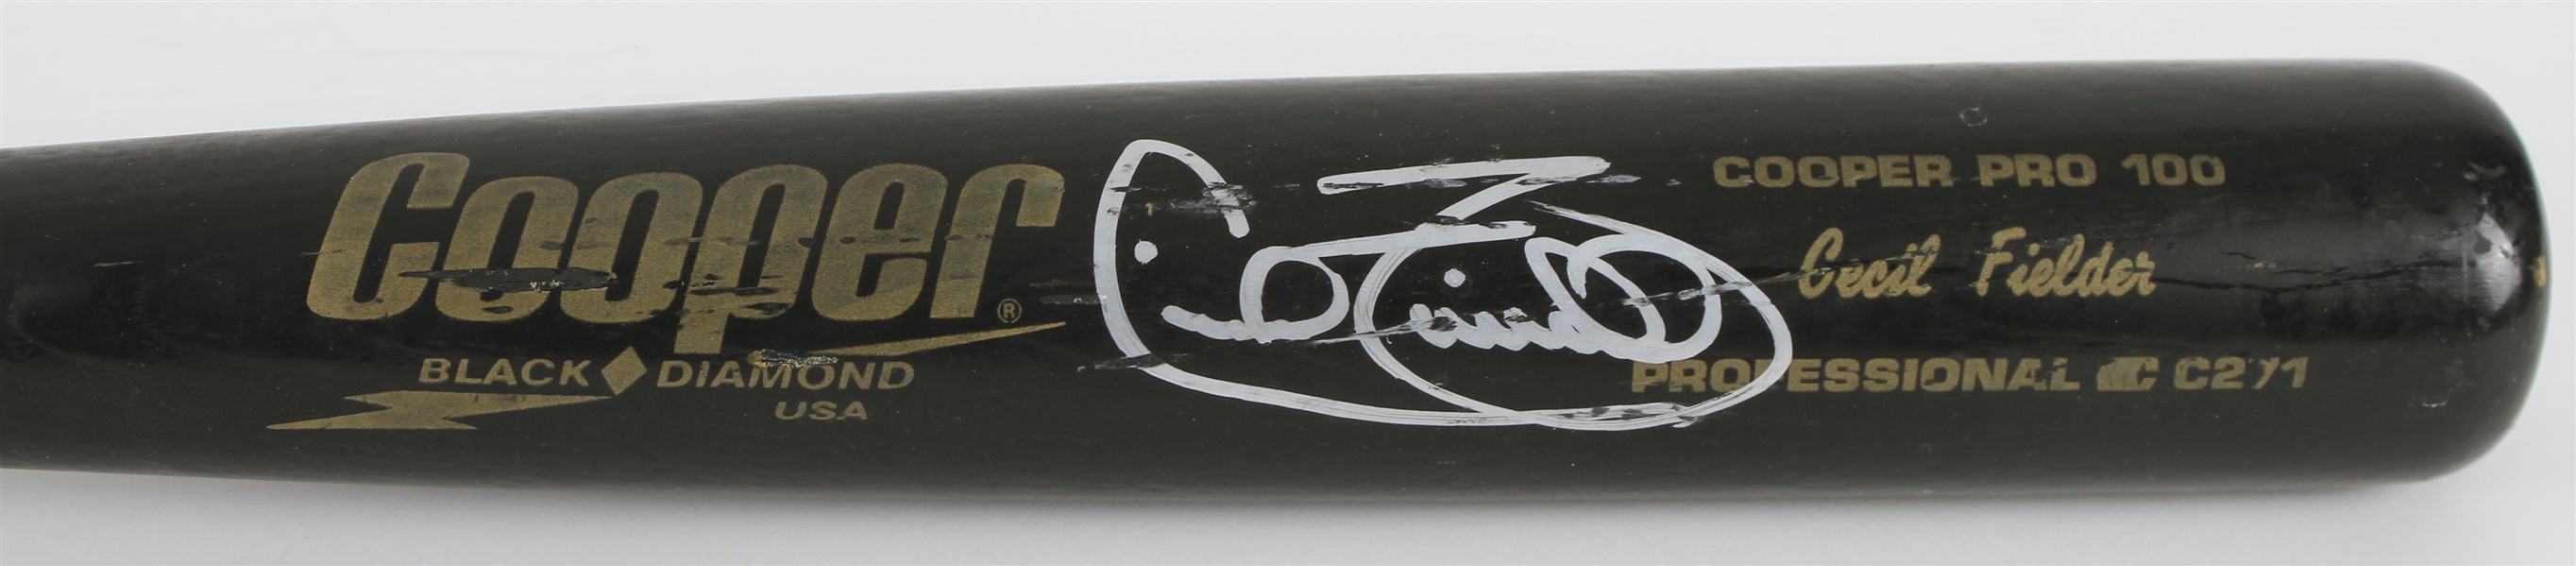 1990s Cecil Fielder Tigers/Yankees Signed Cooper Professional Model Bat (MEARS LOA/JSA)